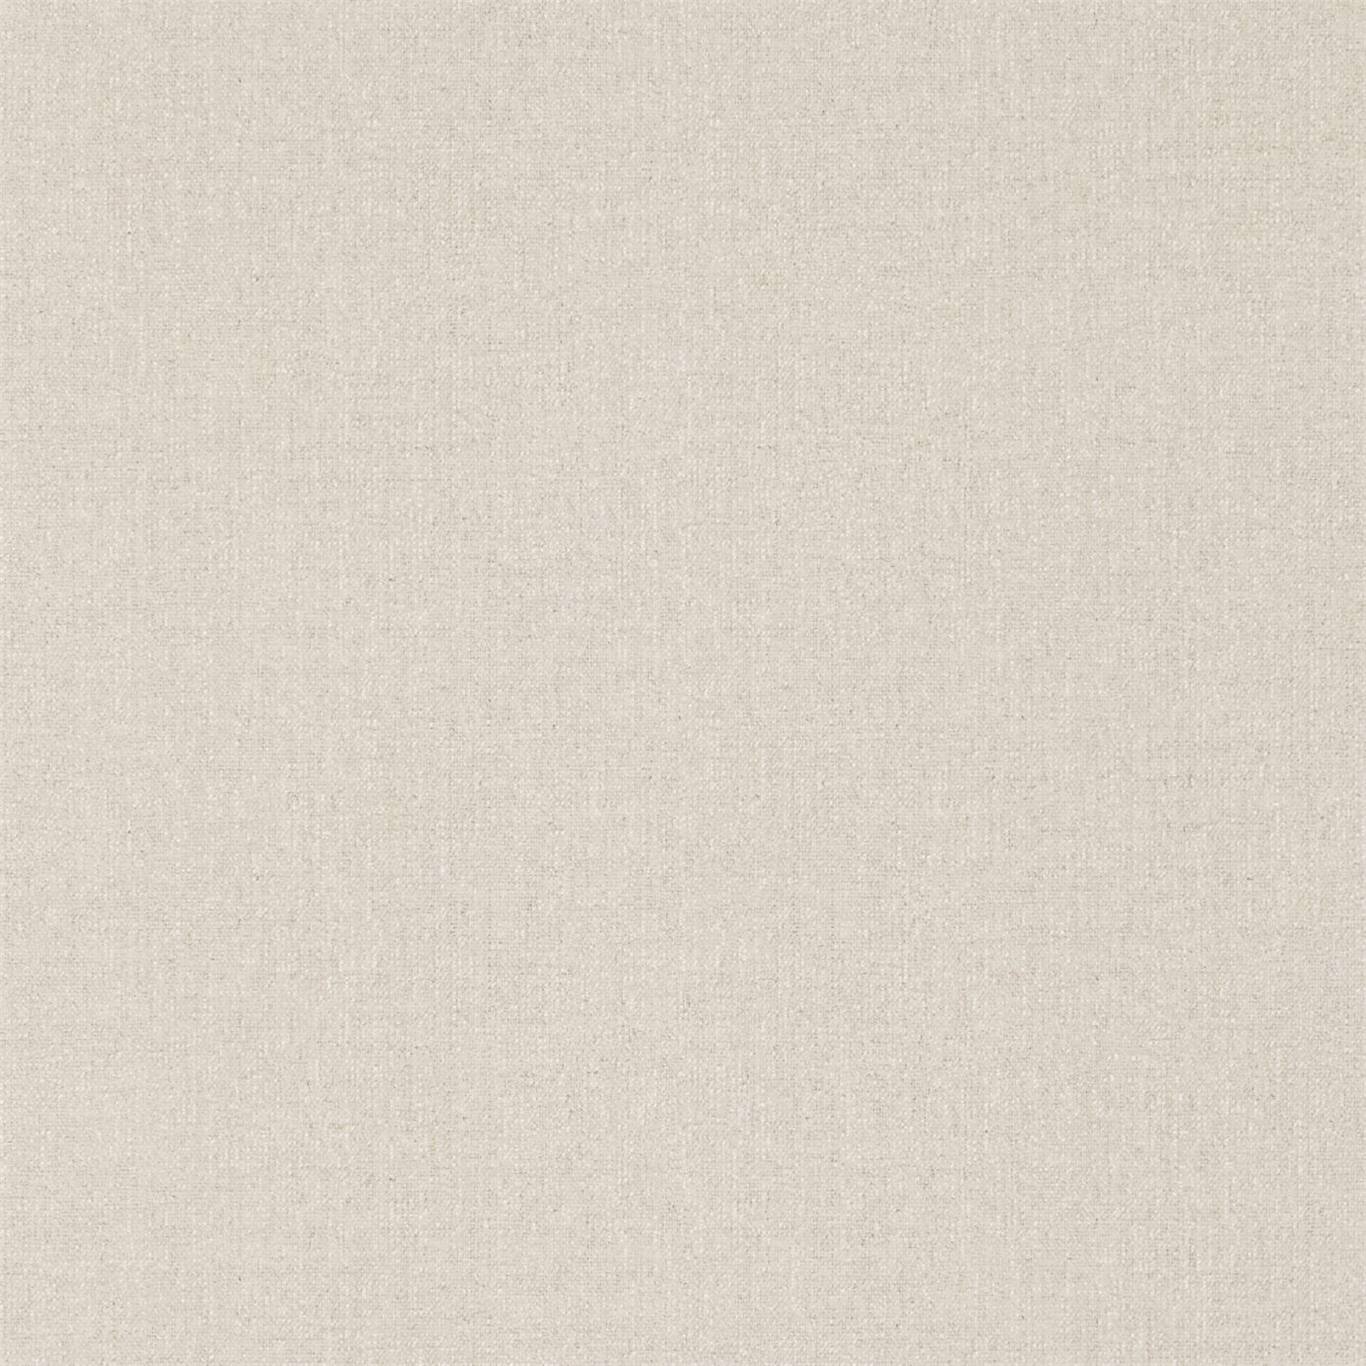 Soho Plain Soft Grey Wallpaper DLMW216912 by Sanderson